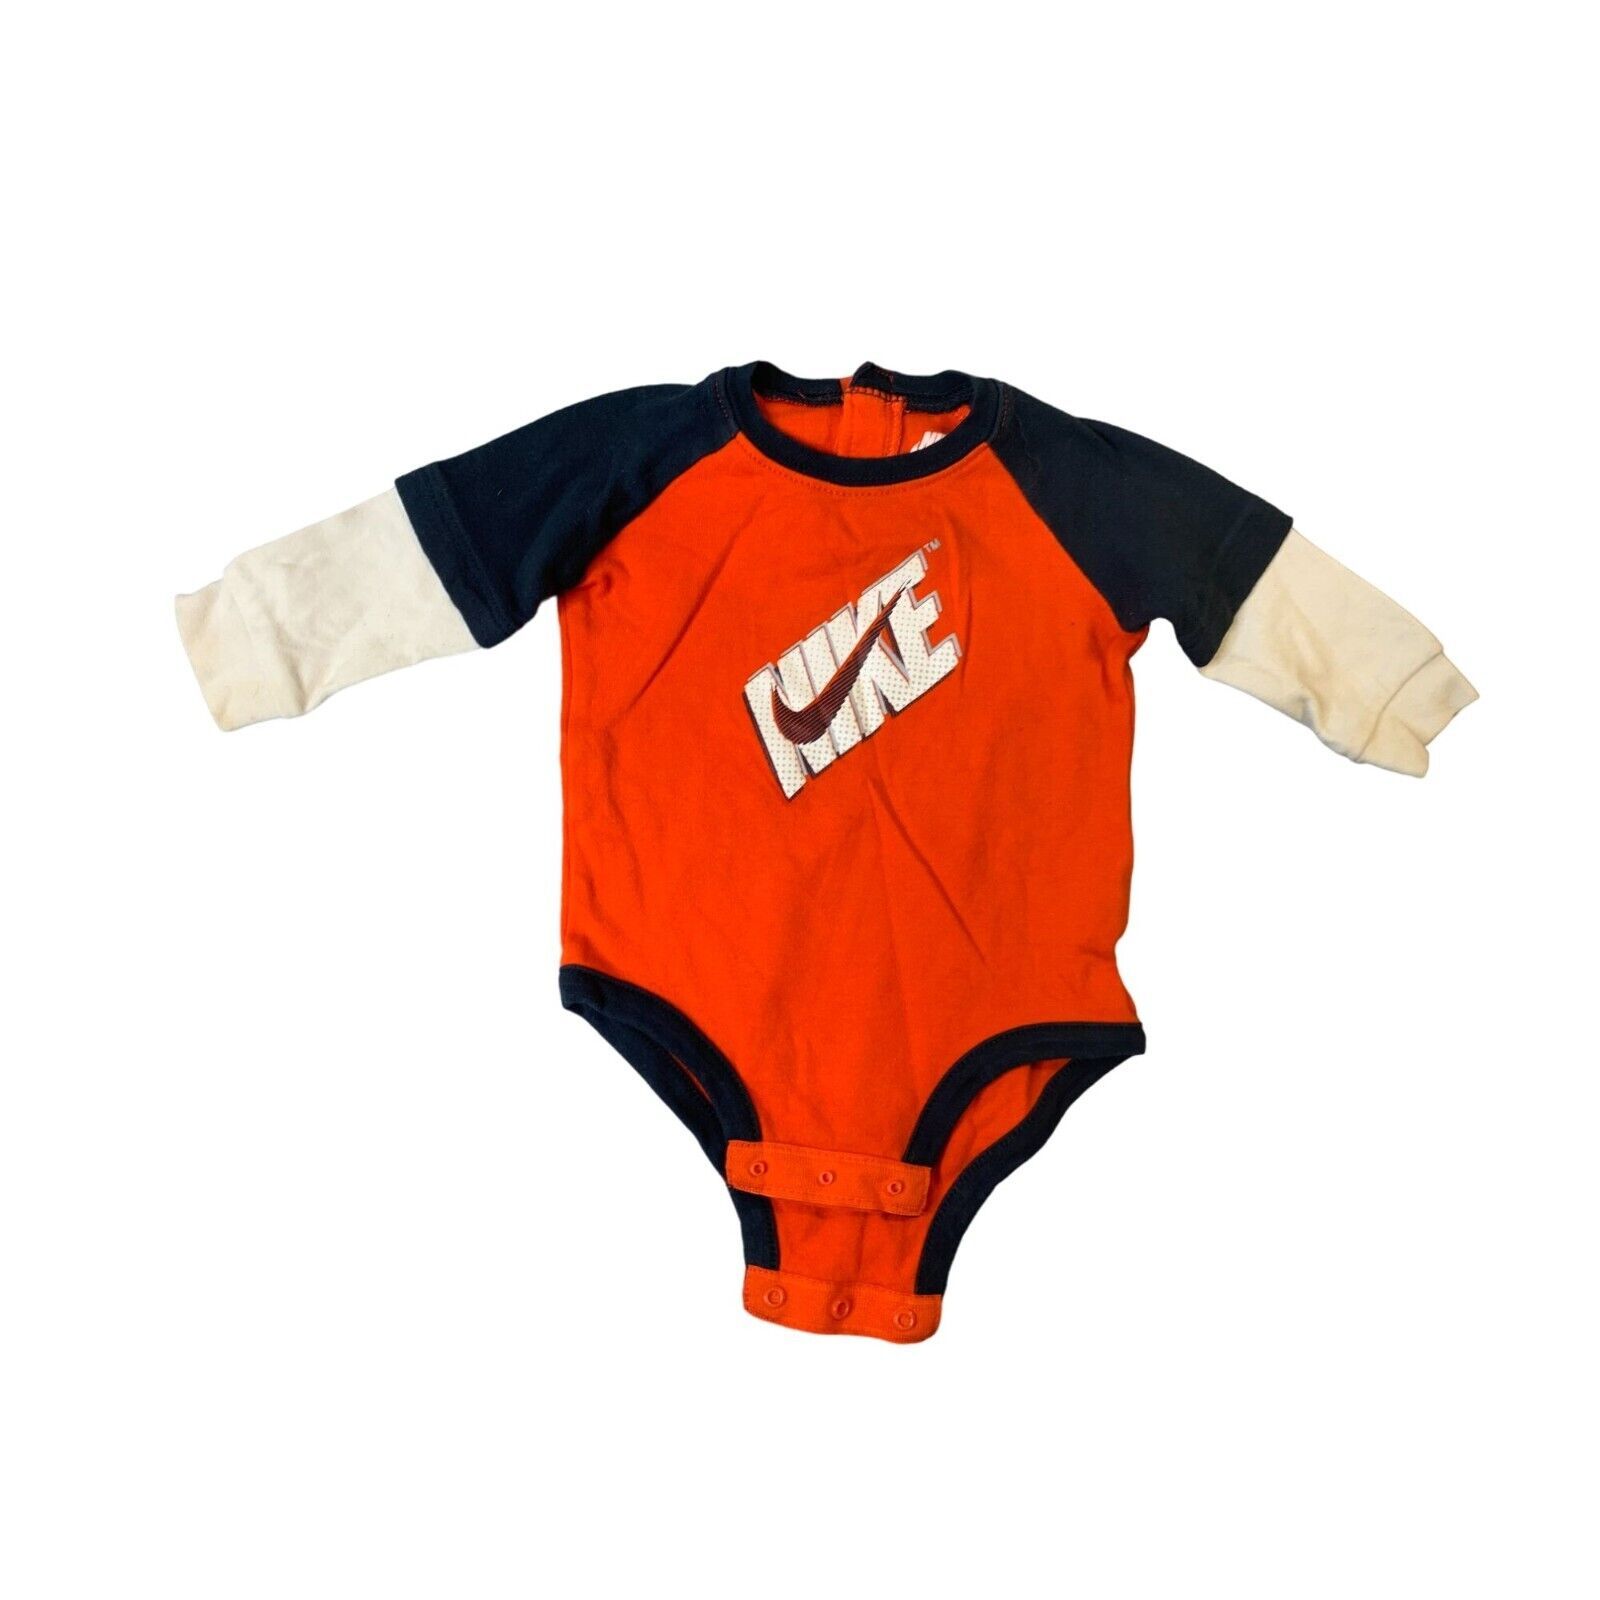 Nike Boys Infant baby Size 6 9 Months 1 Piece Bodysuit Long Sleeve Layered Orang - $9.89